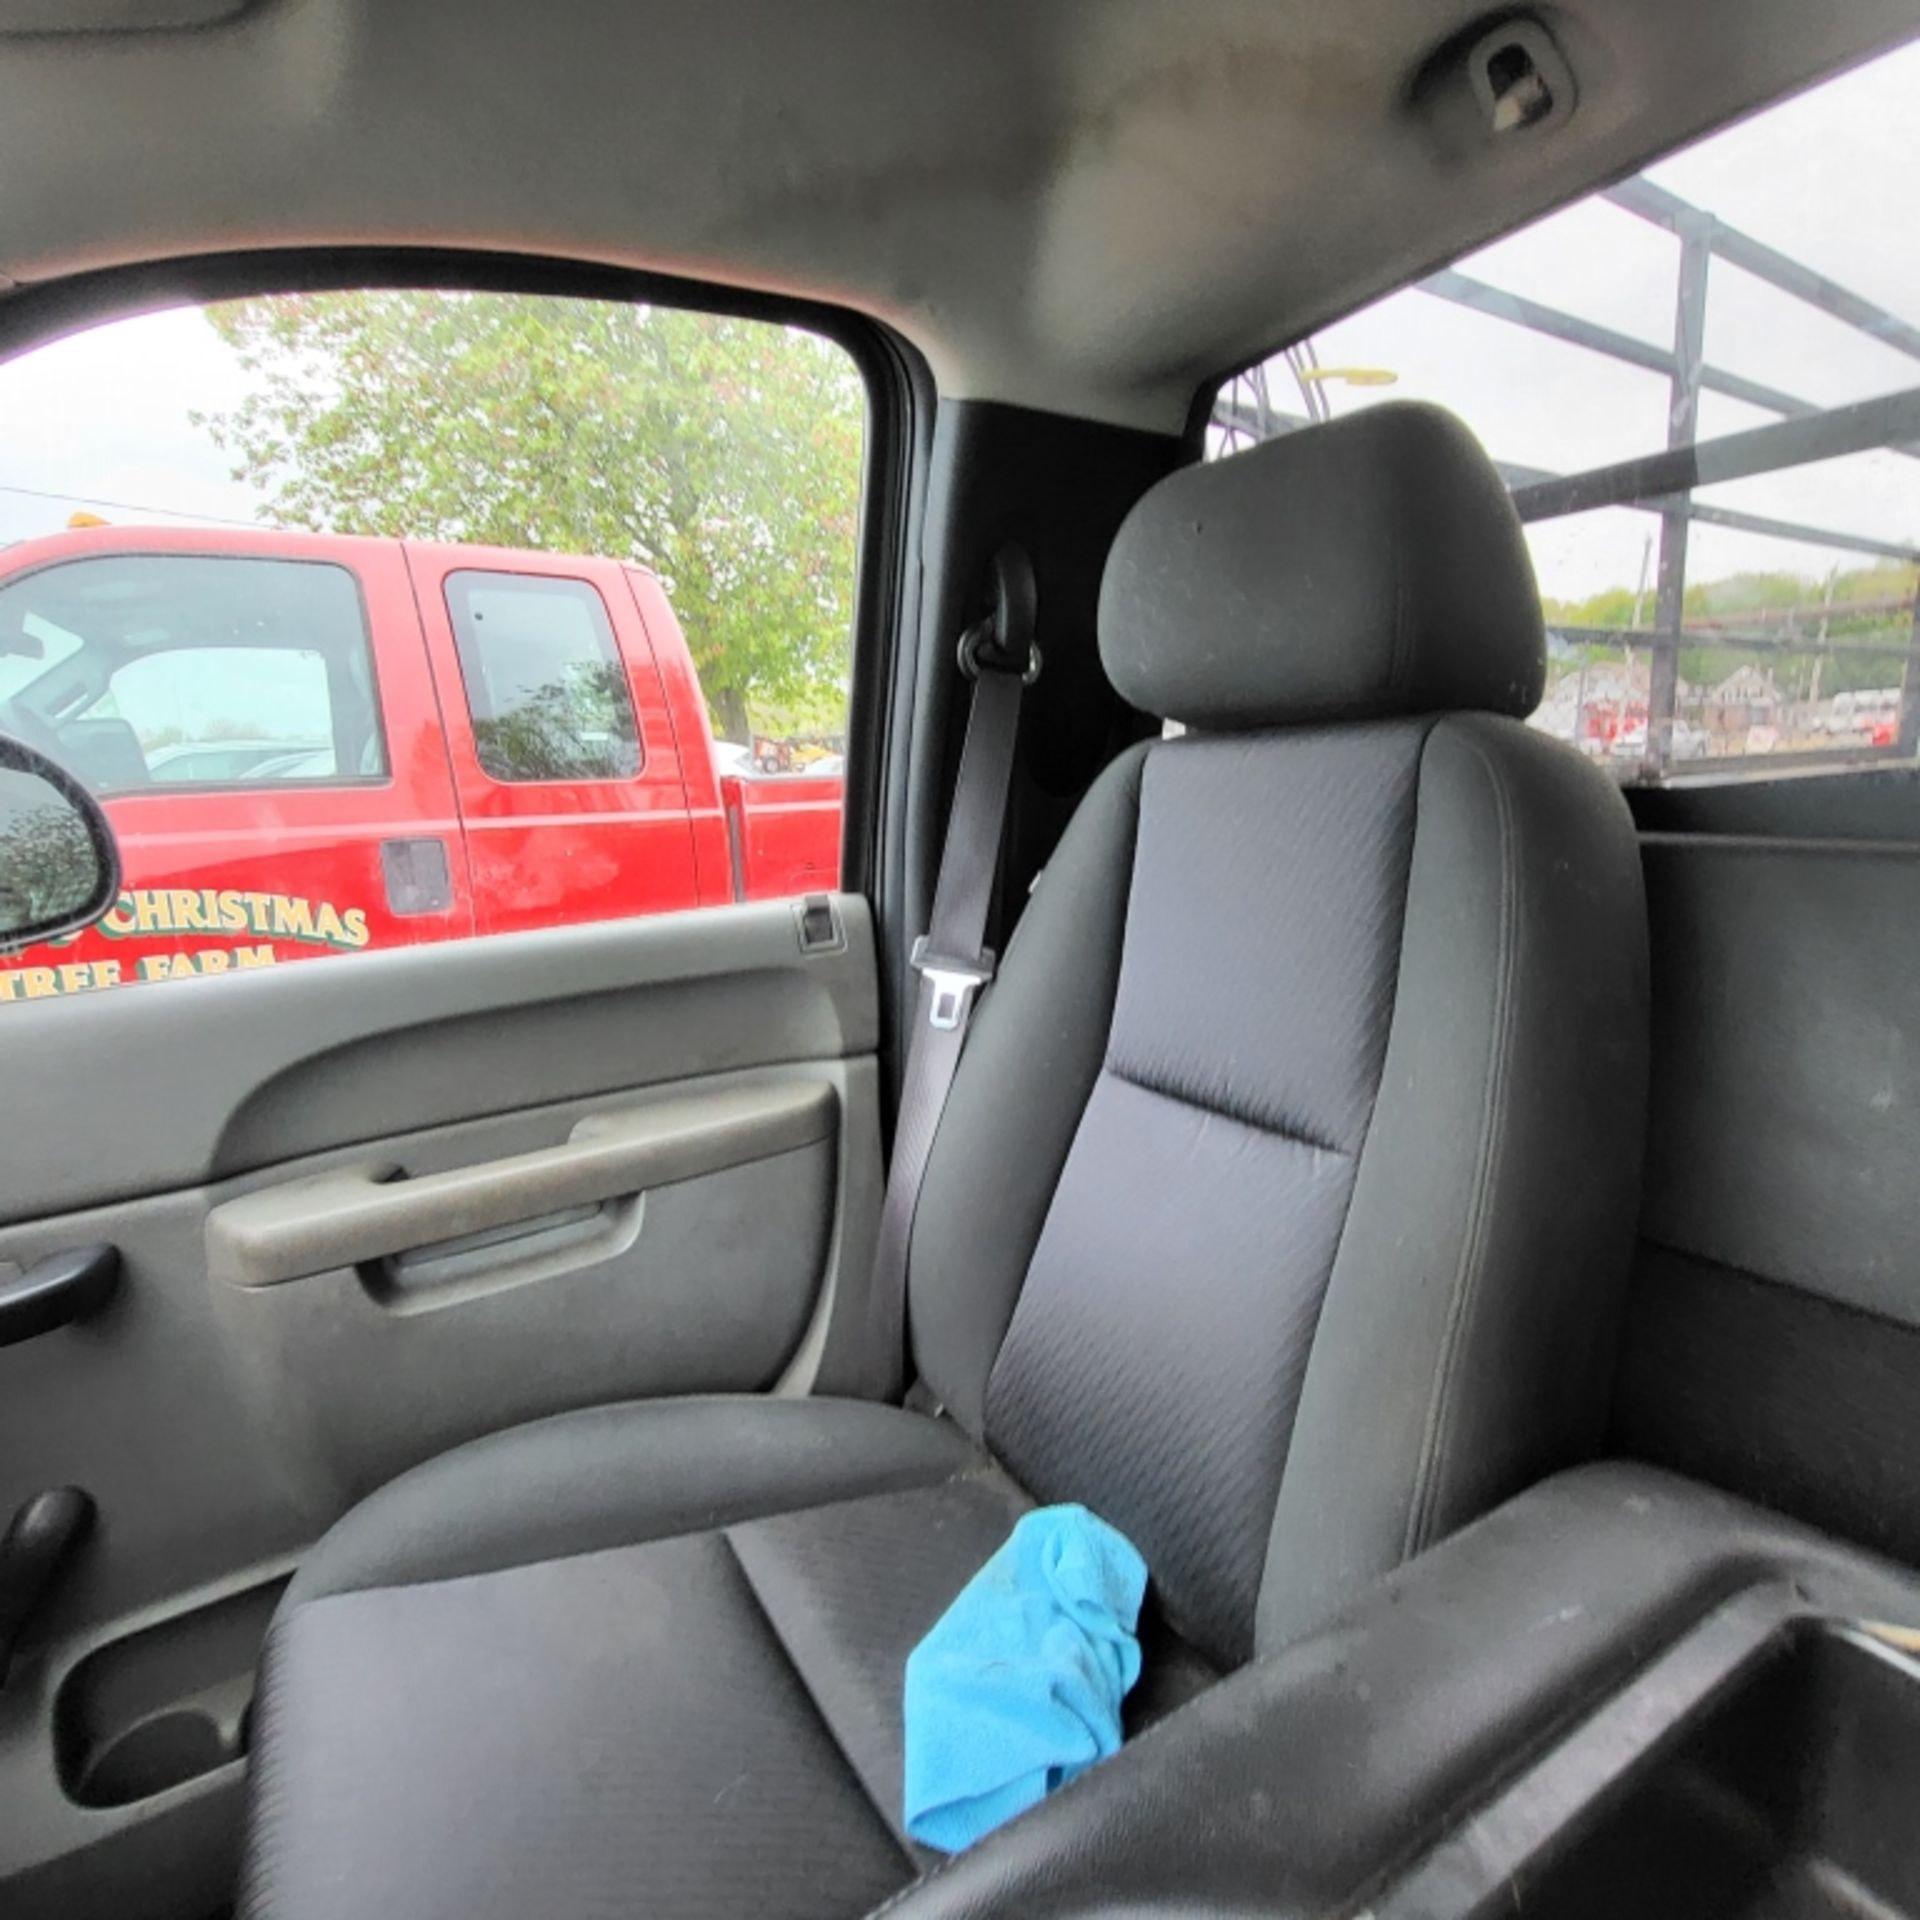 2013 Chevy Silverado Pickup - Image 9 of 17